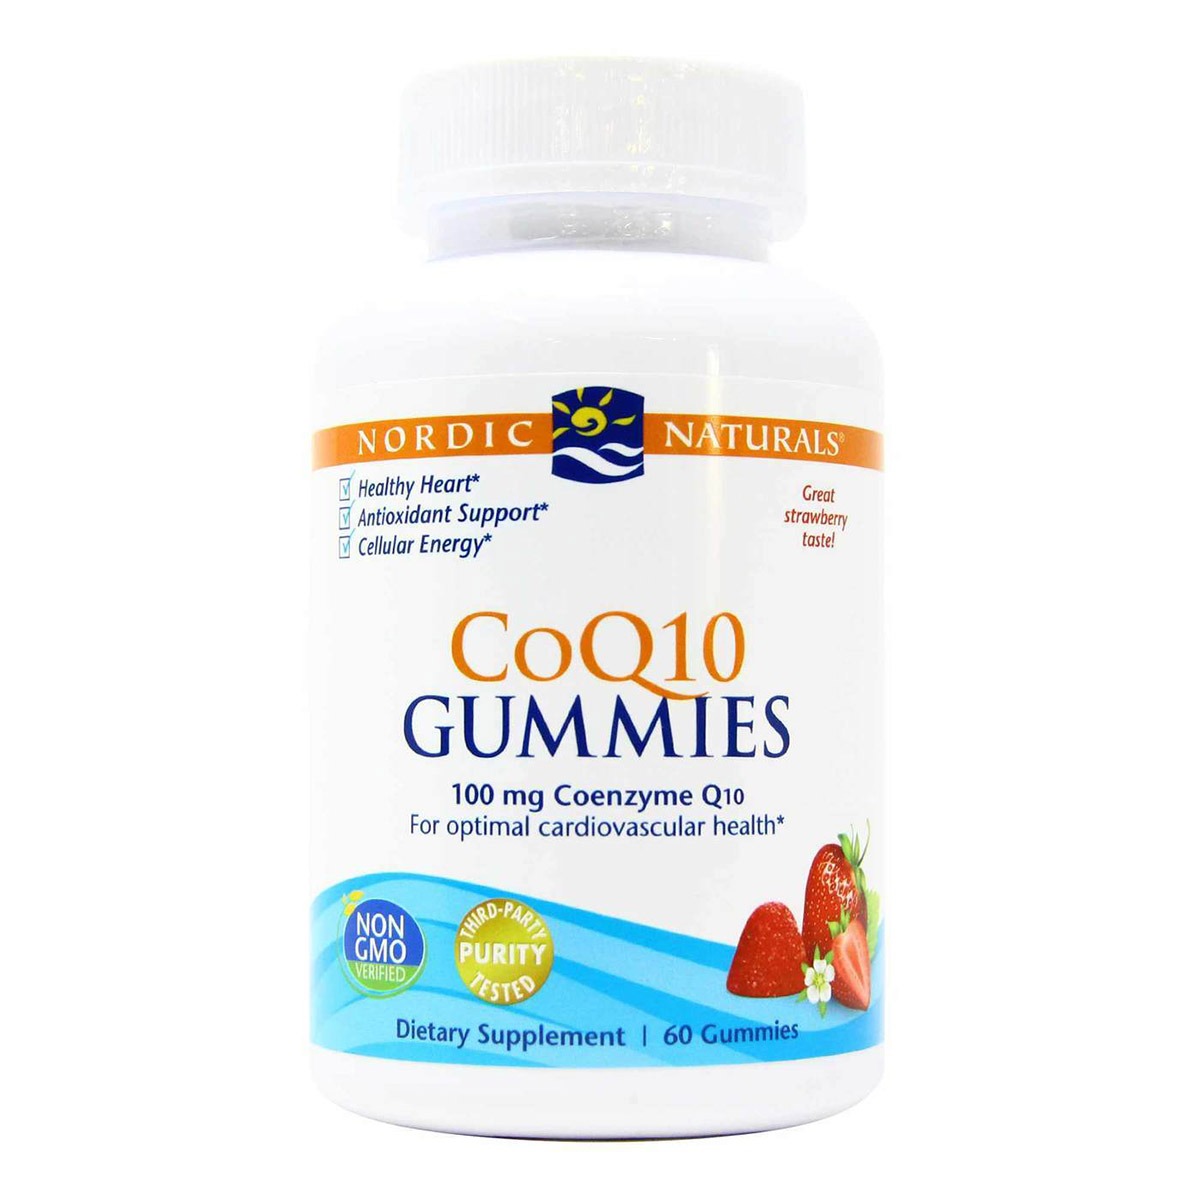 CoQ10 gummies